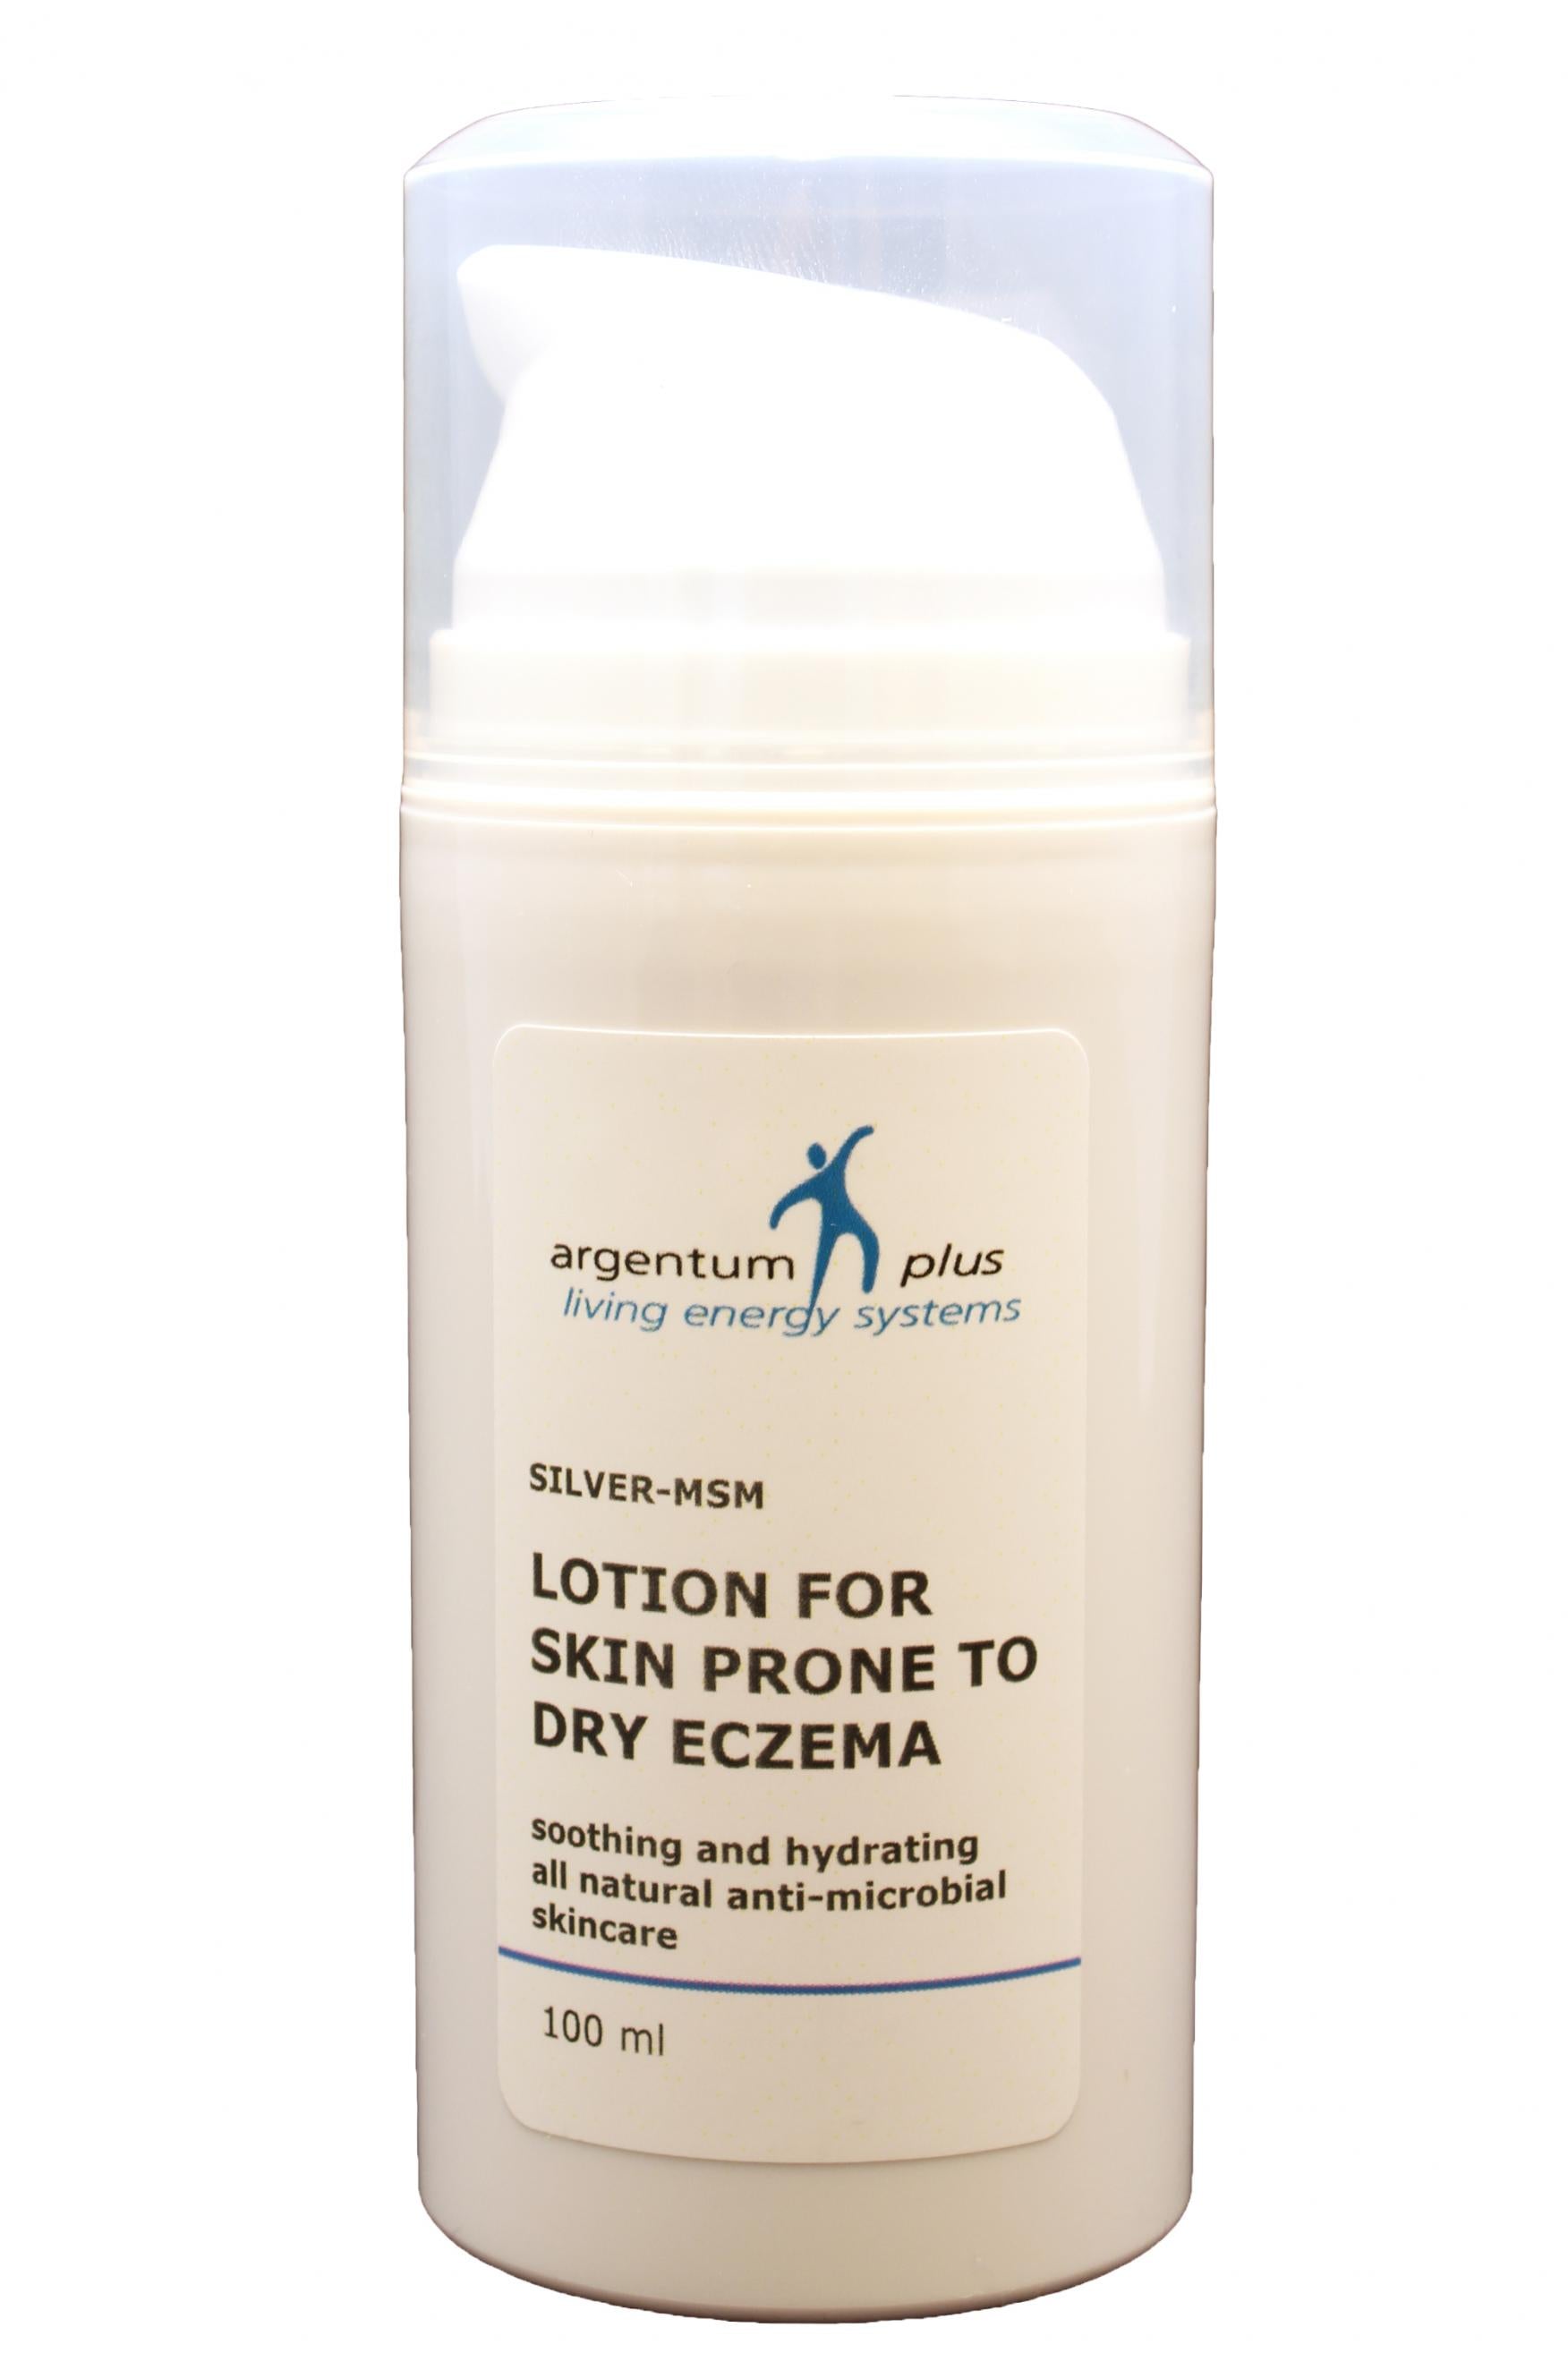 Argentum Plus Silver-MSM Lotion for Skin Prone to DRY Eczema 100ml